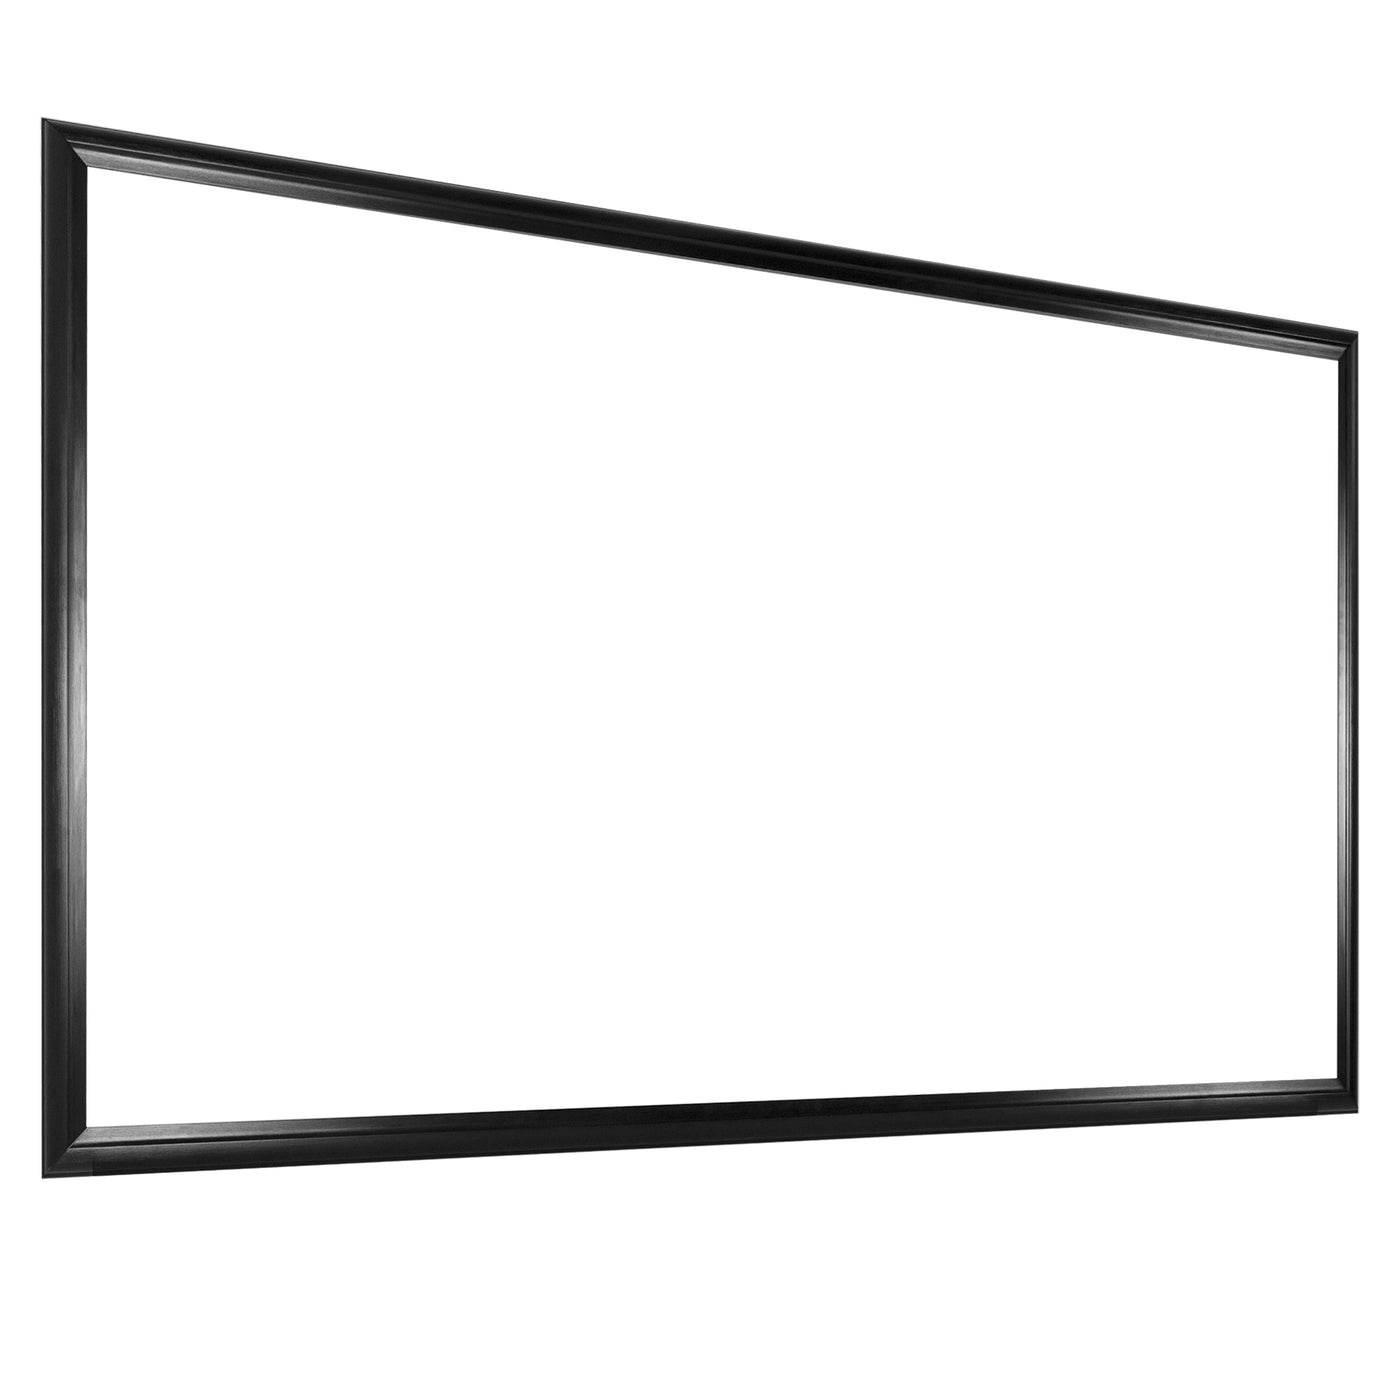  Elegant Border Frame Designed for Samsung Frame TVs